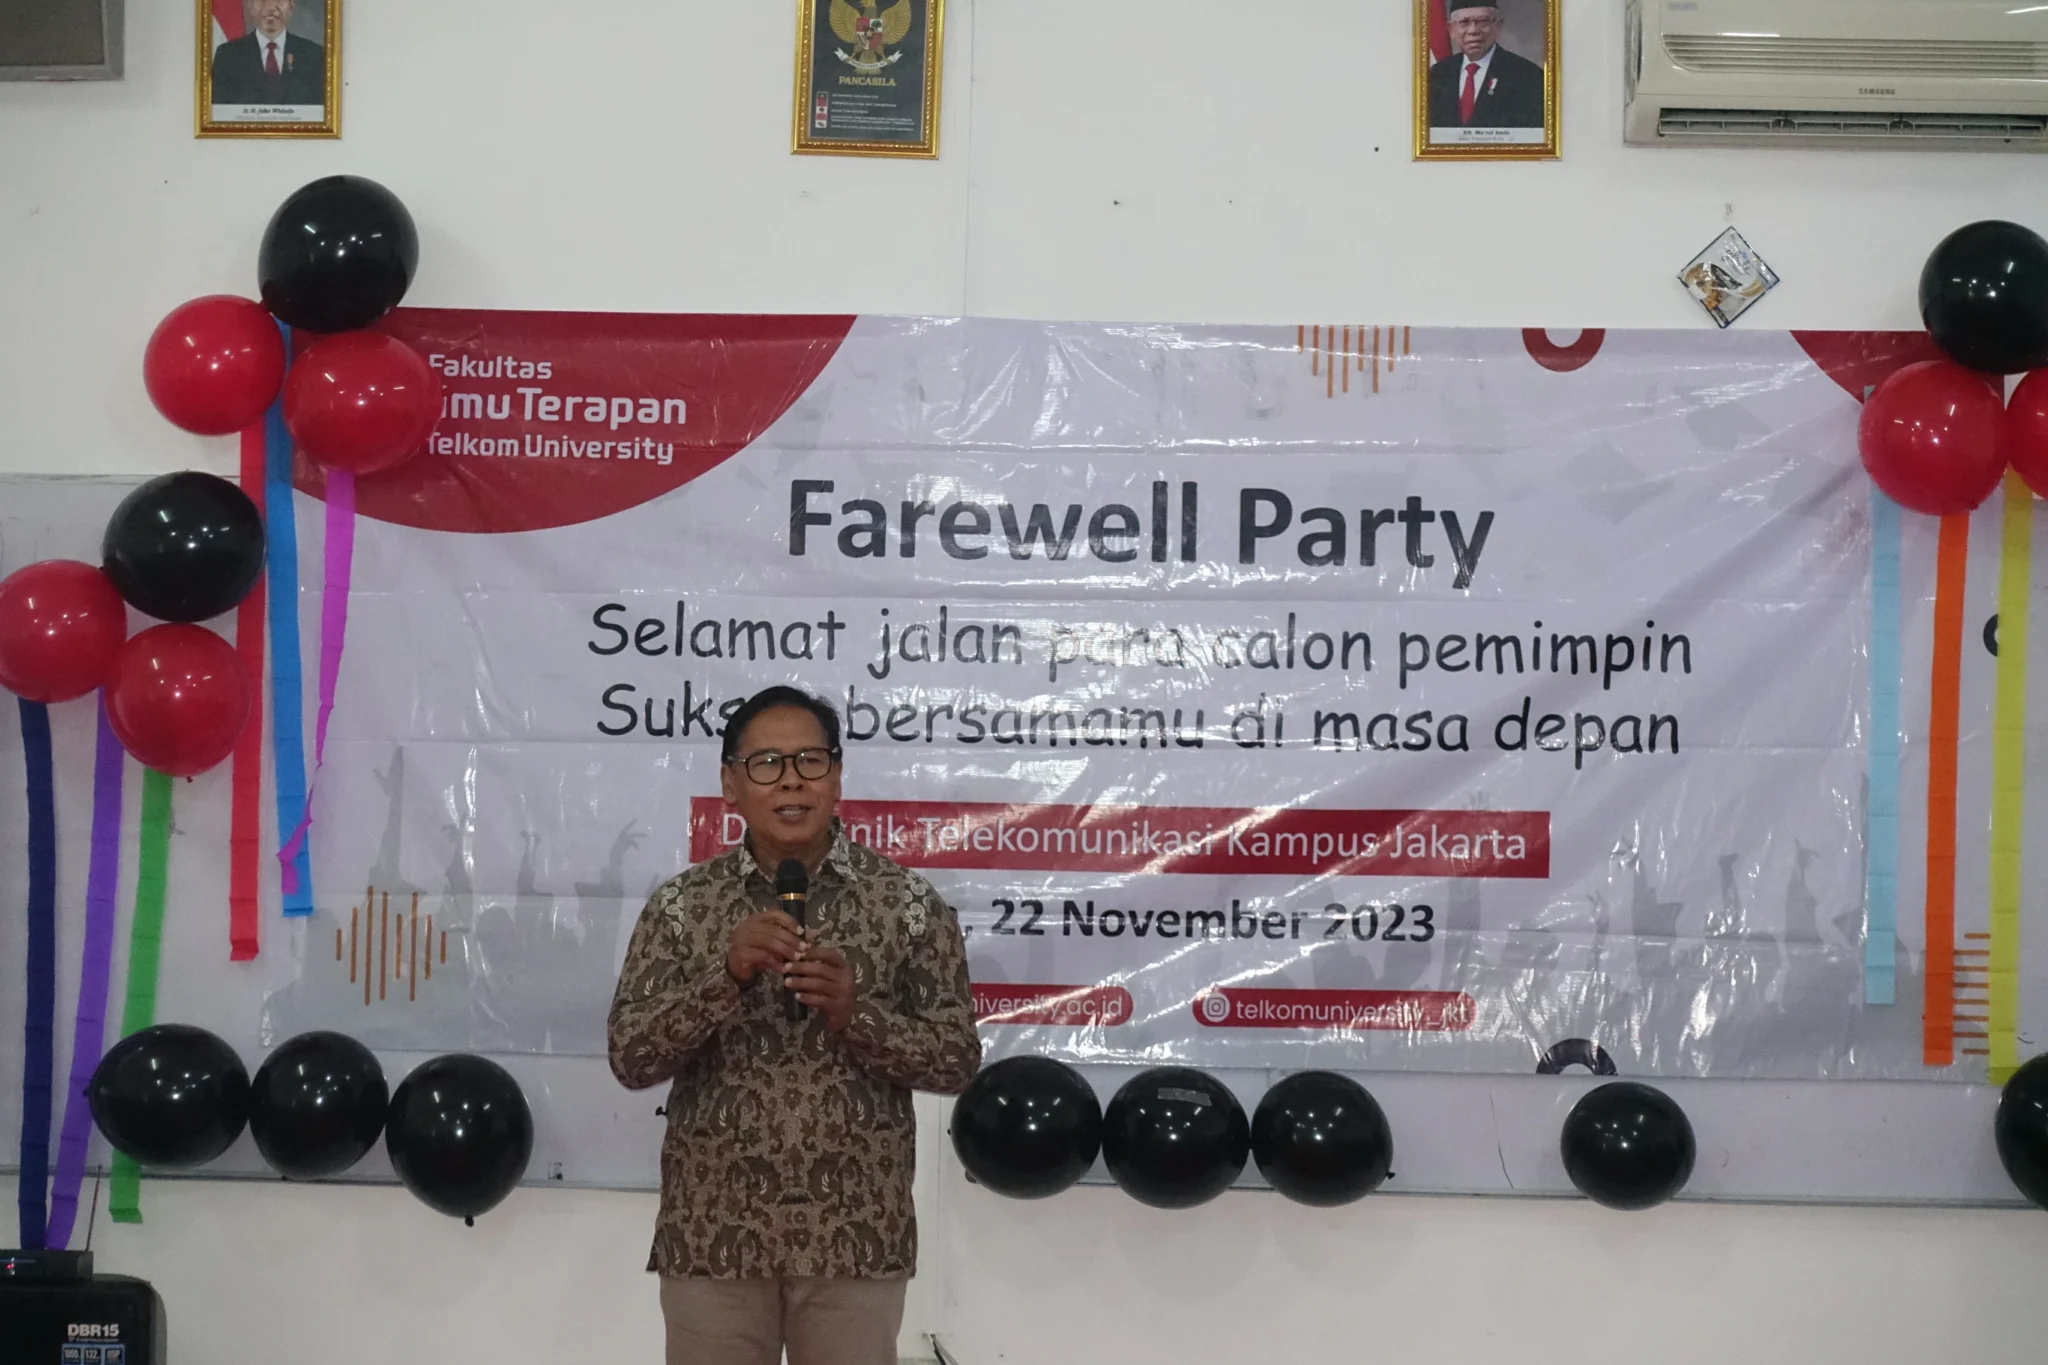 sambutan dari Bapak Dr. Ir. Agus Achmad Suhendra, M.T, Direktur TelU Kampus Jakarta di acara farewell Party